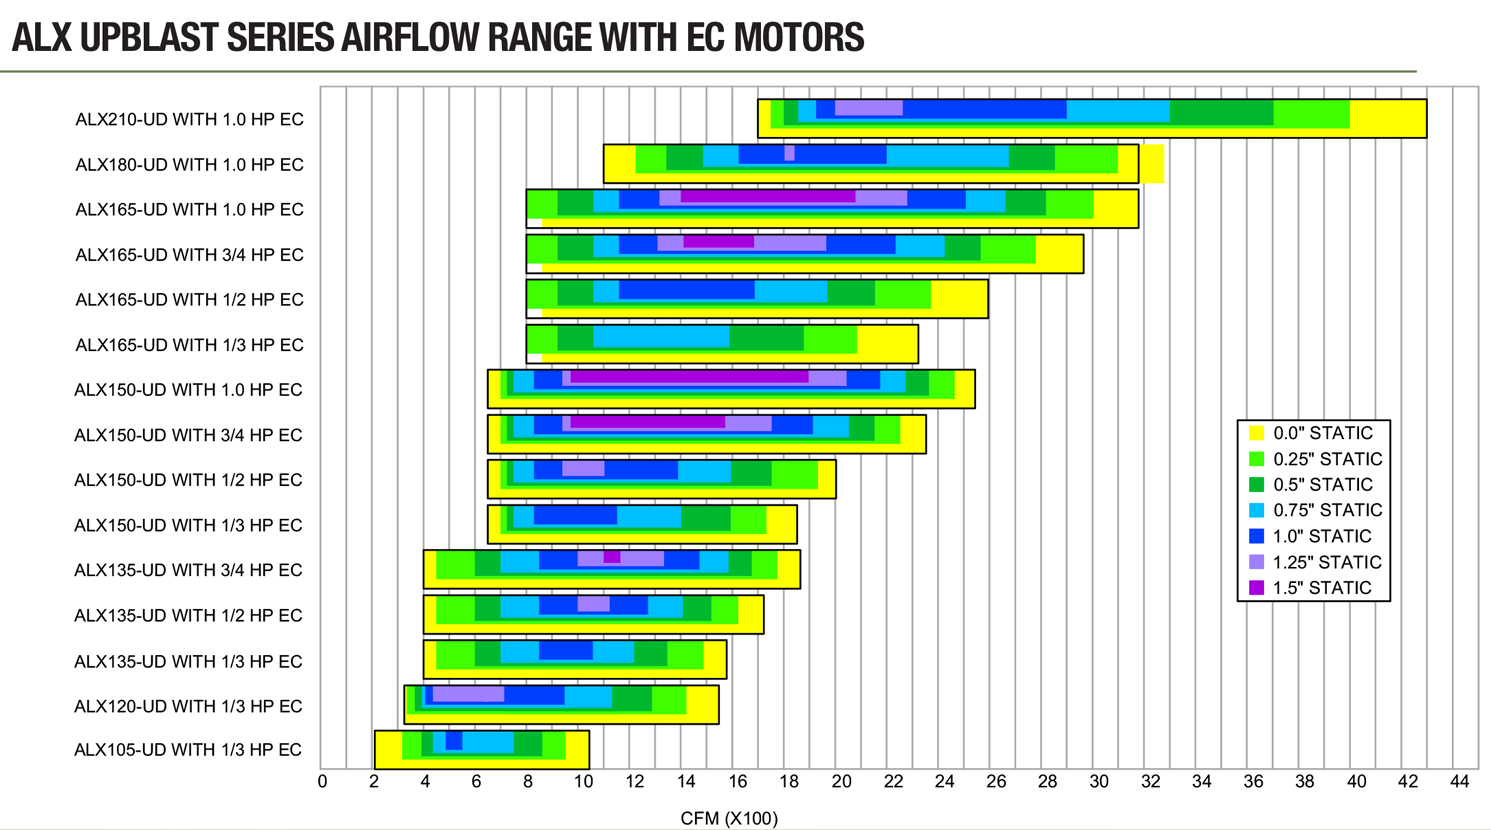 ALX Upblast Series Airflow Range with EC Motors